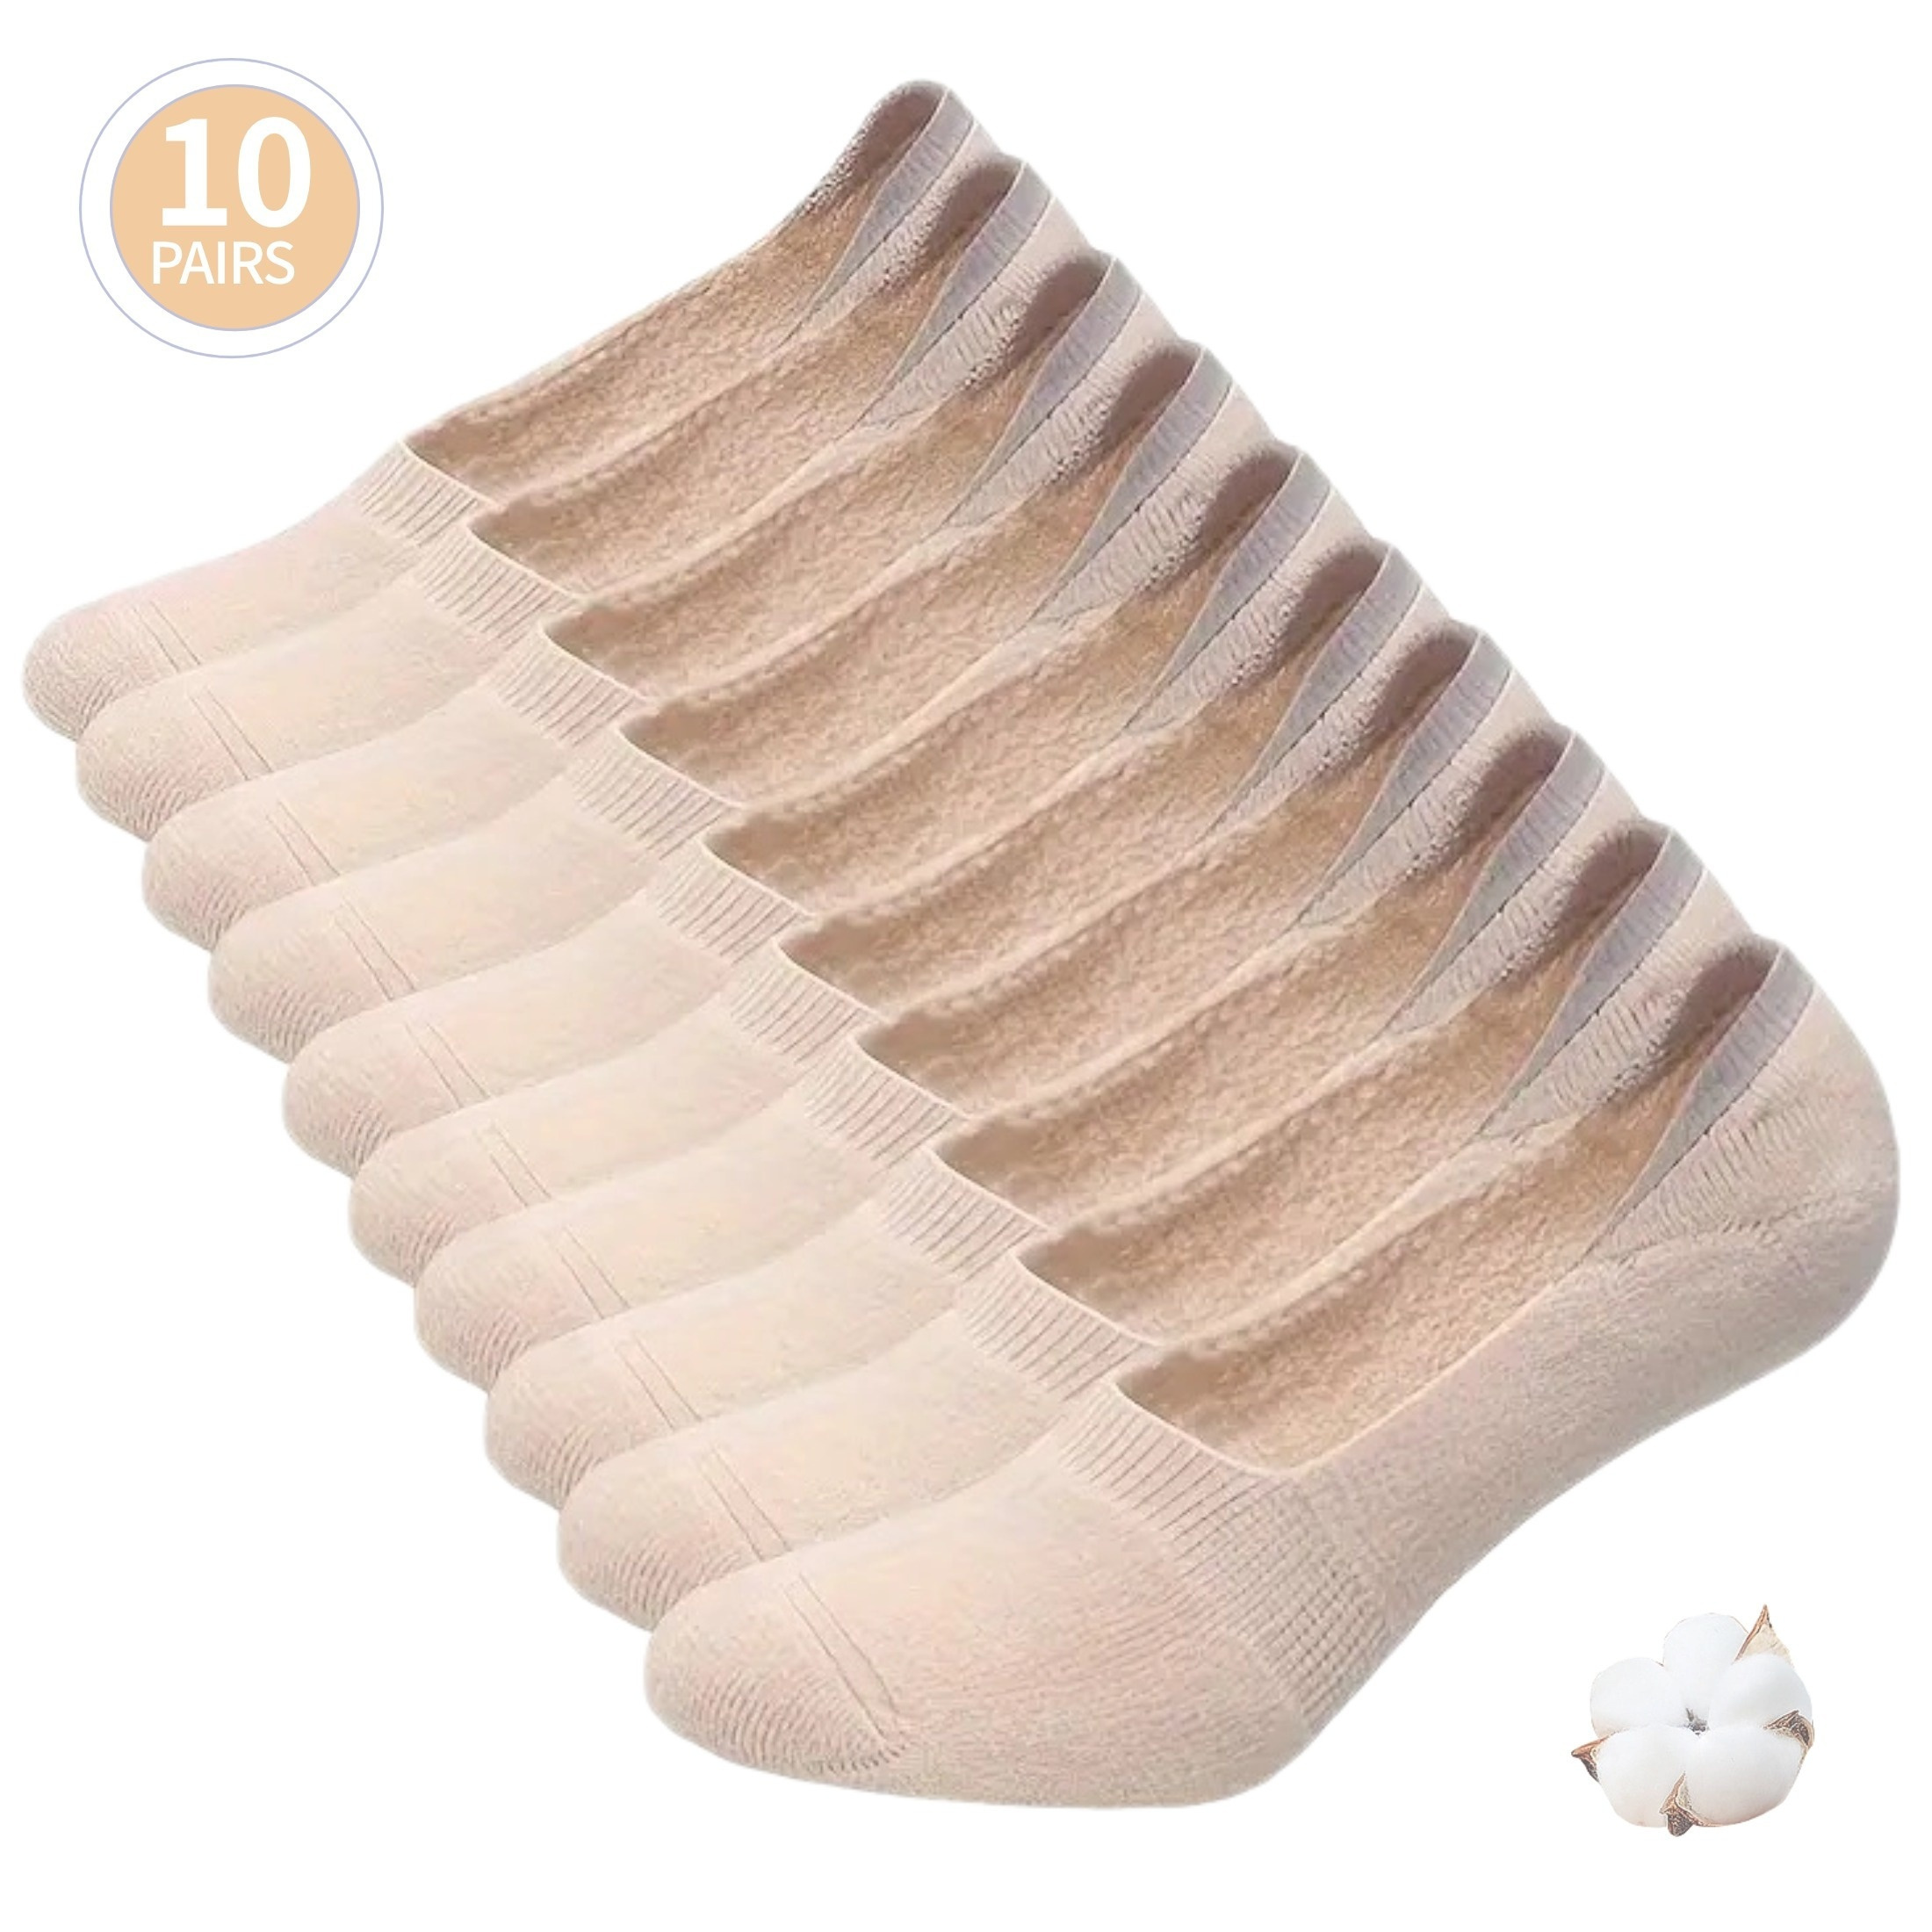 

5 Pairs Simple No Show Socks, Breathable & Sweat-absorbing Boat Socks, Women's Stockings & Hosiery